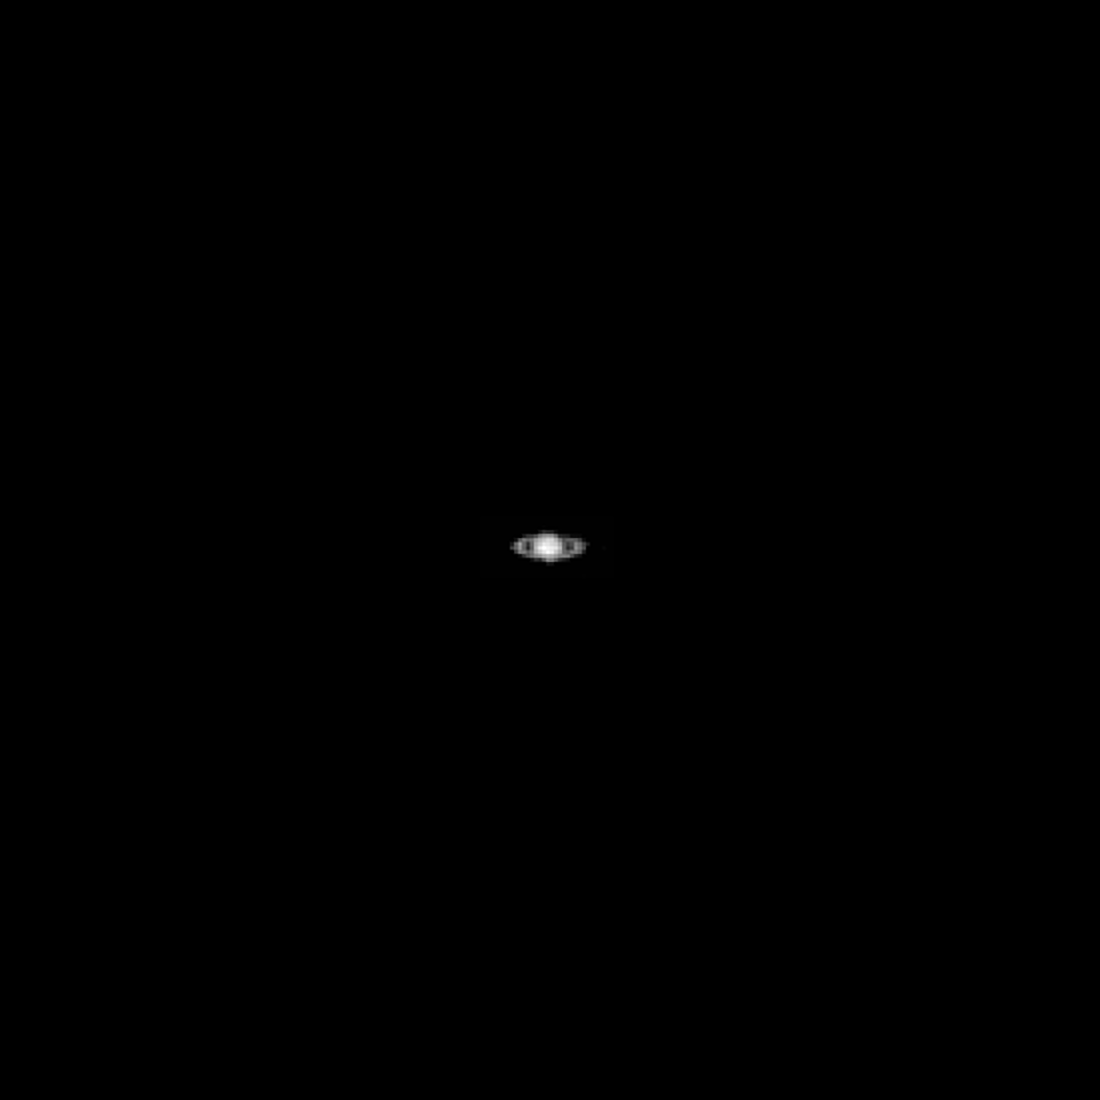 LUNA Imaginile IMPRESIONANTE care Arata Planeta Saturn apropiere